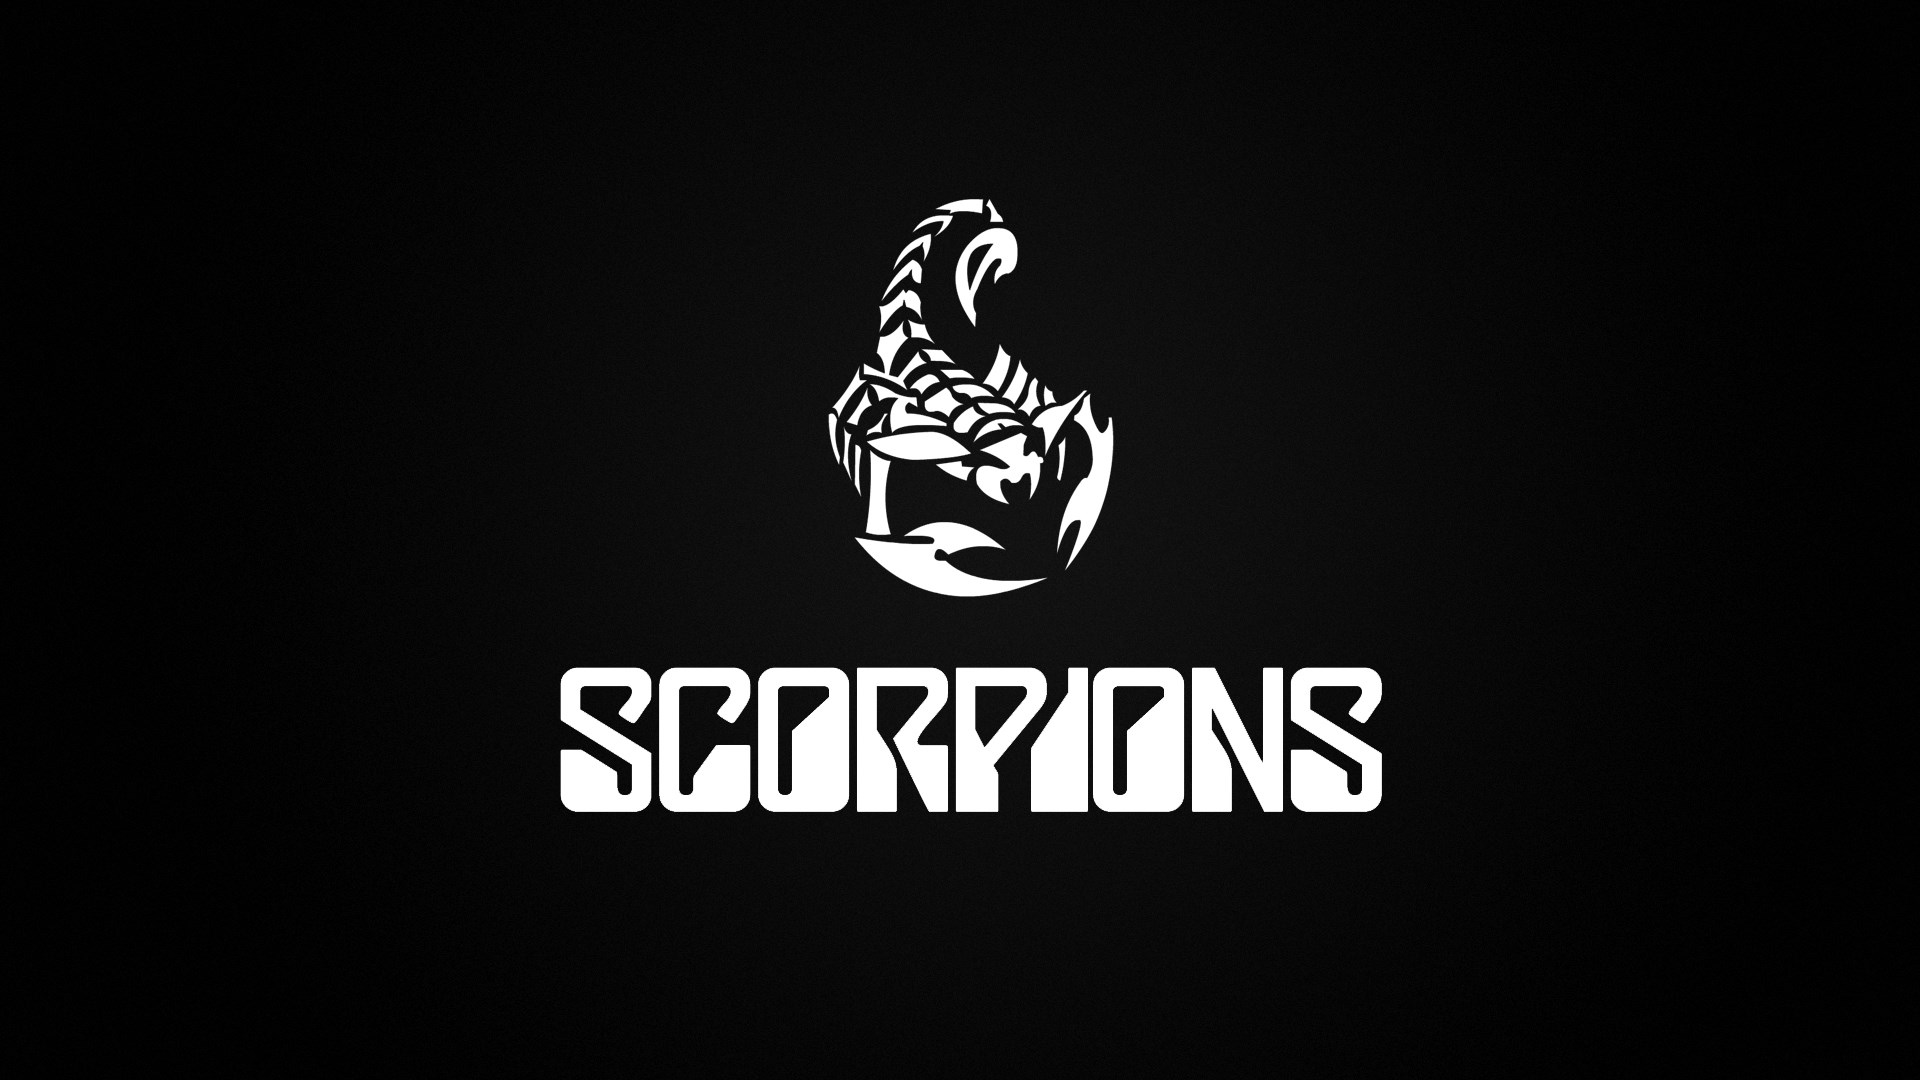 Scottsdale Scorpions Logo